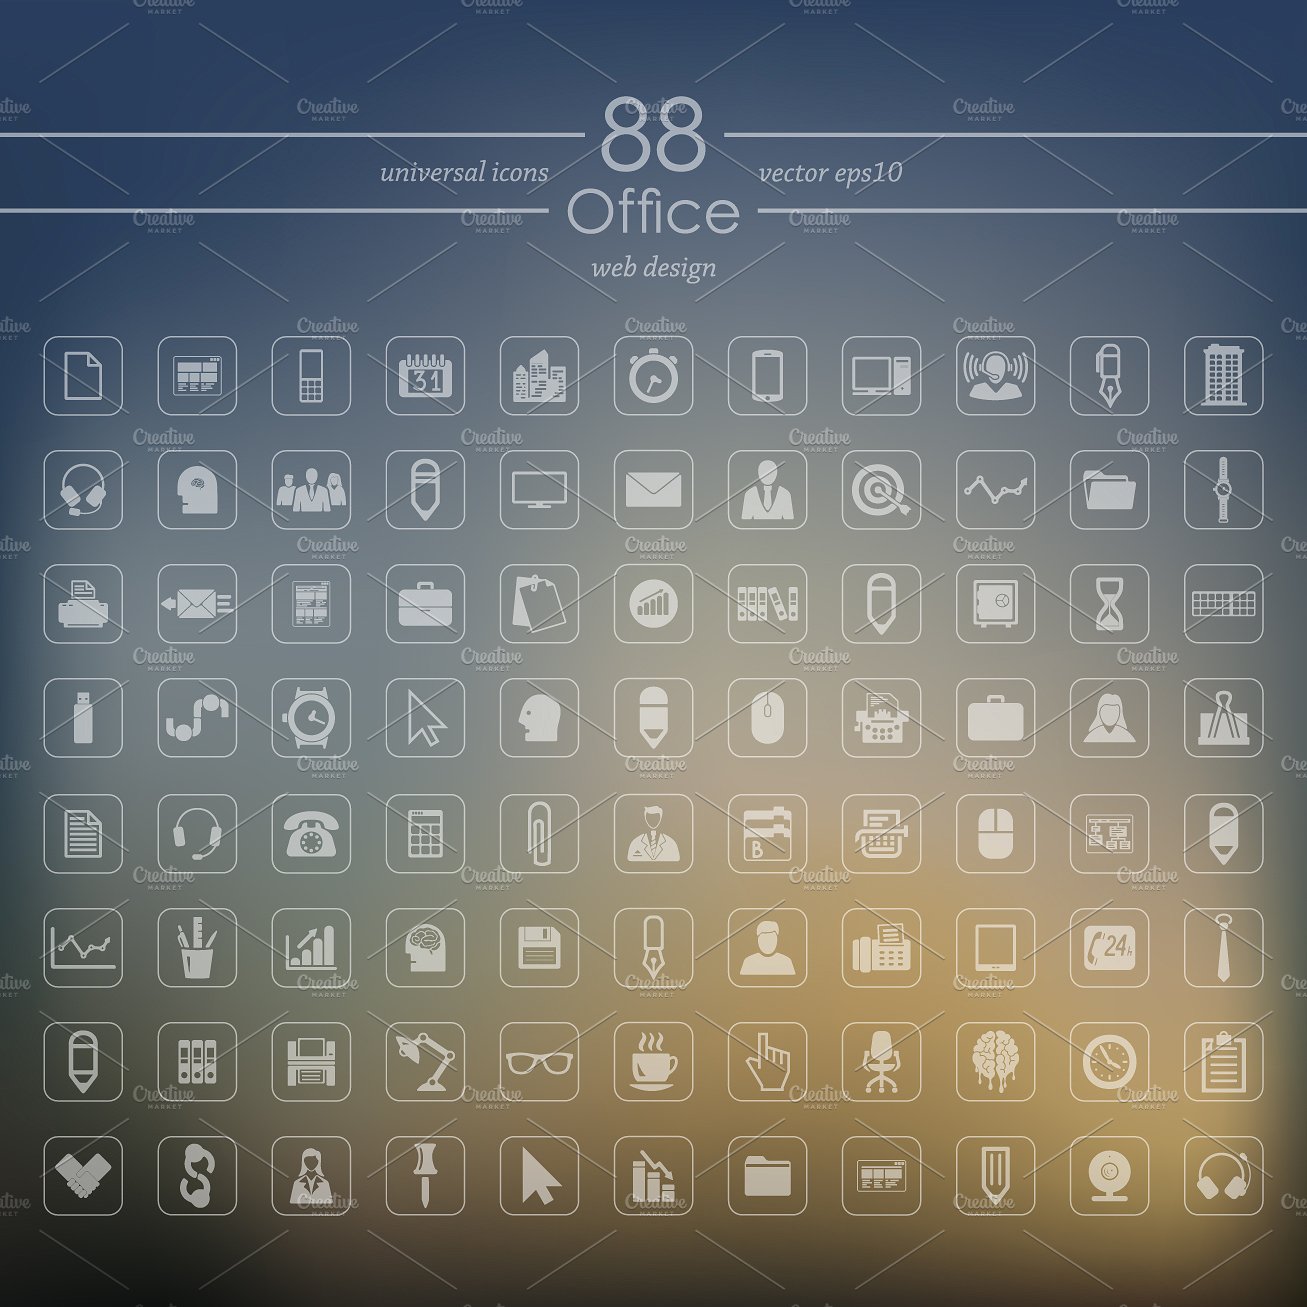 商务上班图标矢量素材88 OFFICE icons #200